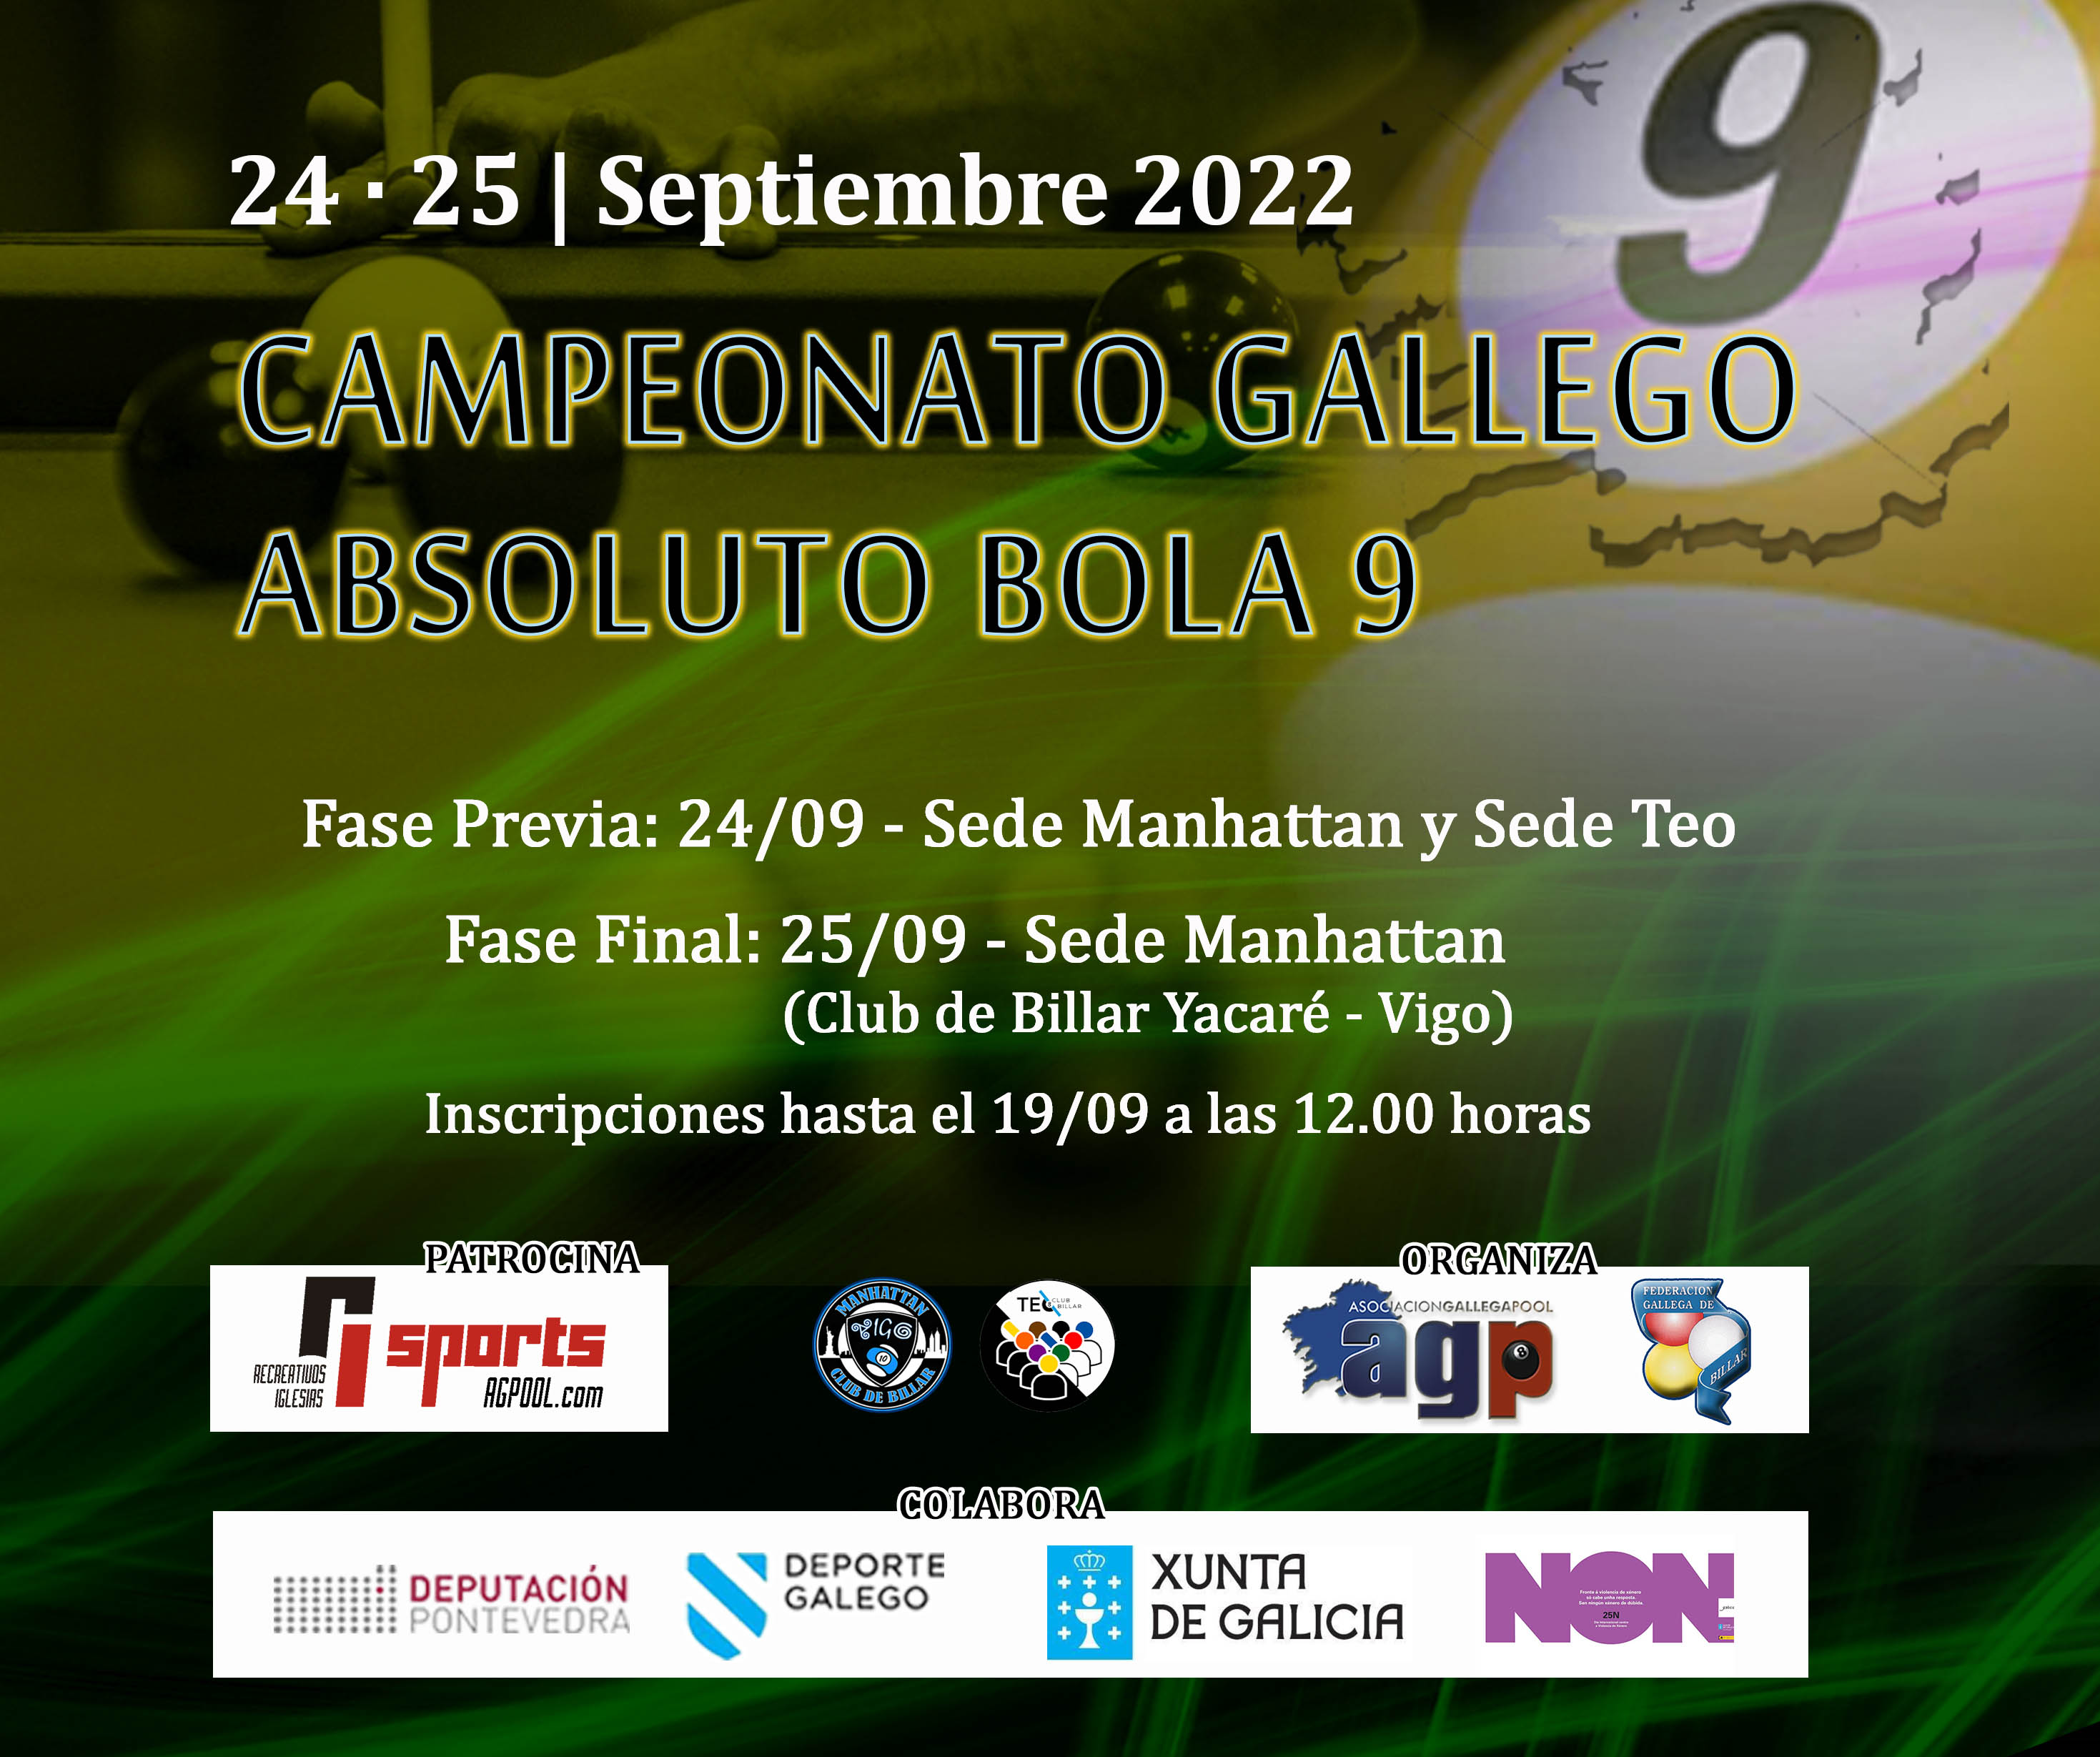 Campeonato Gallego Absoluto Bola 9